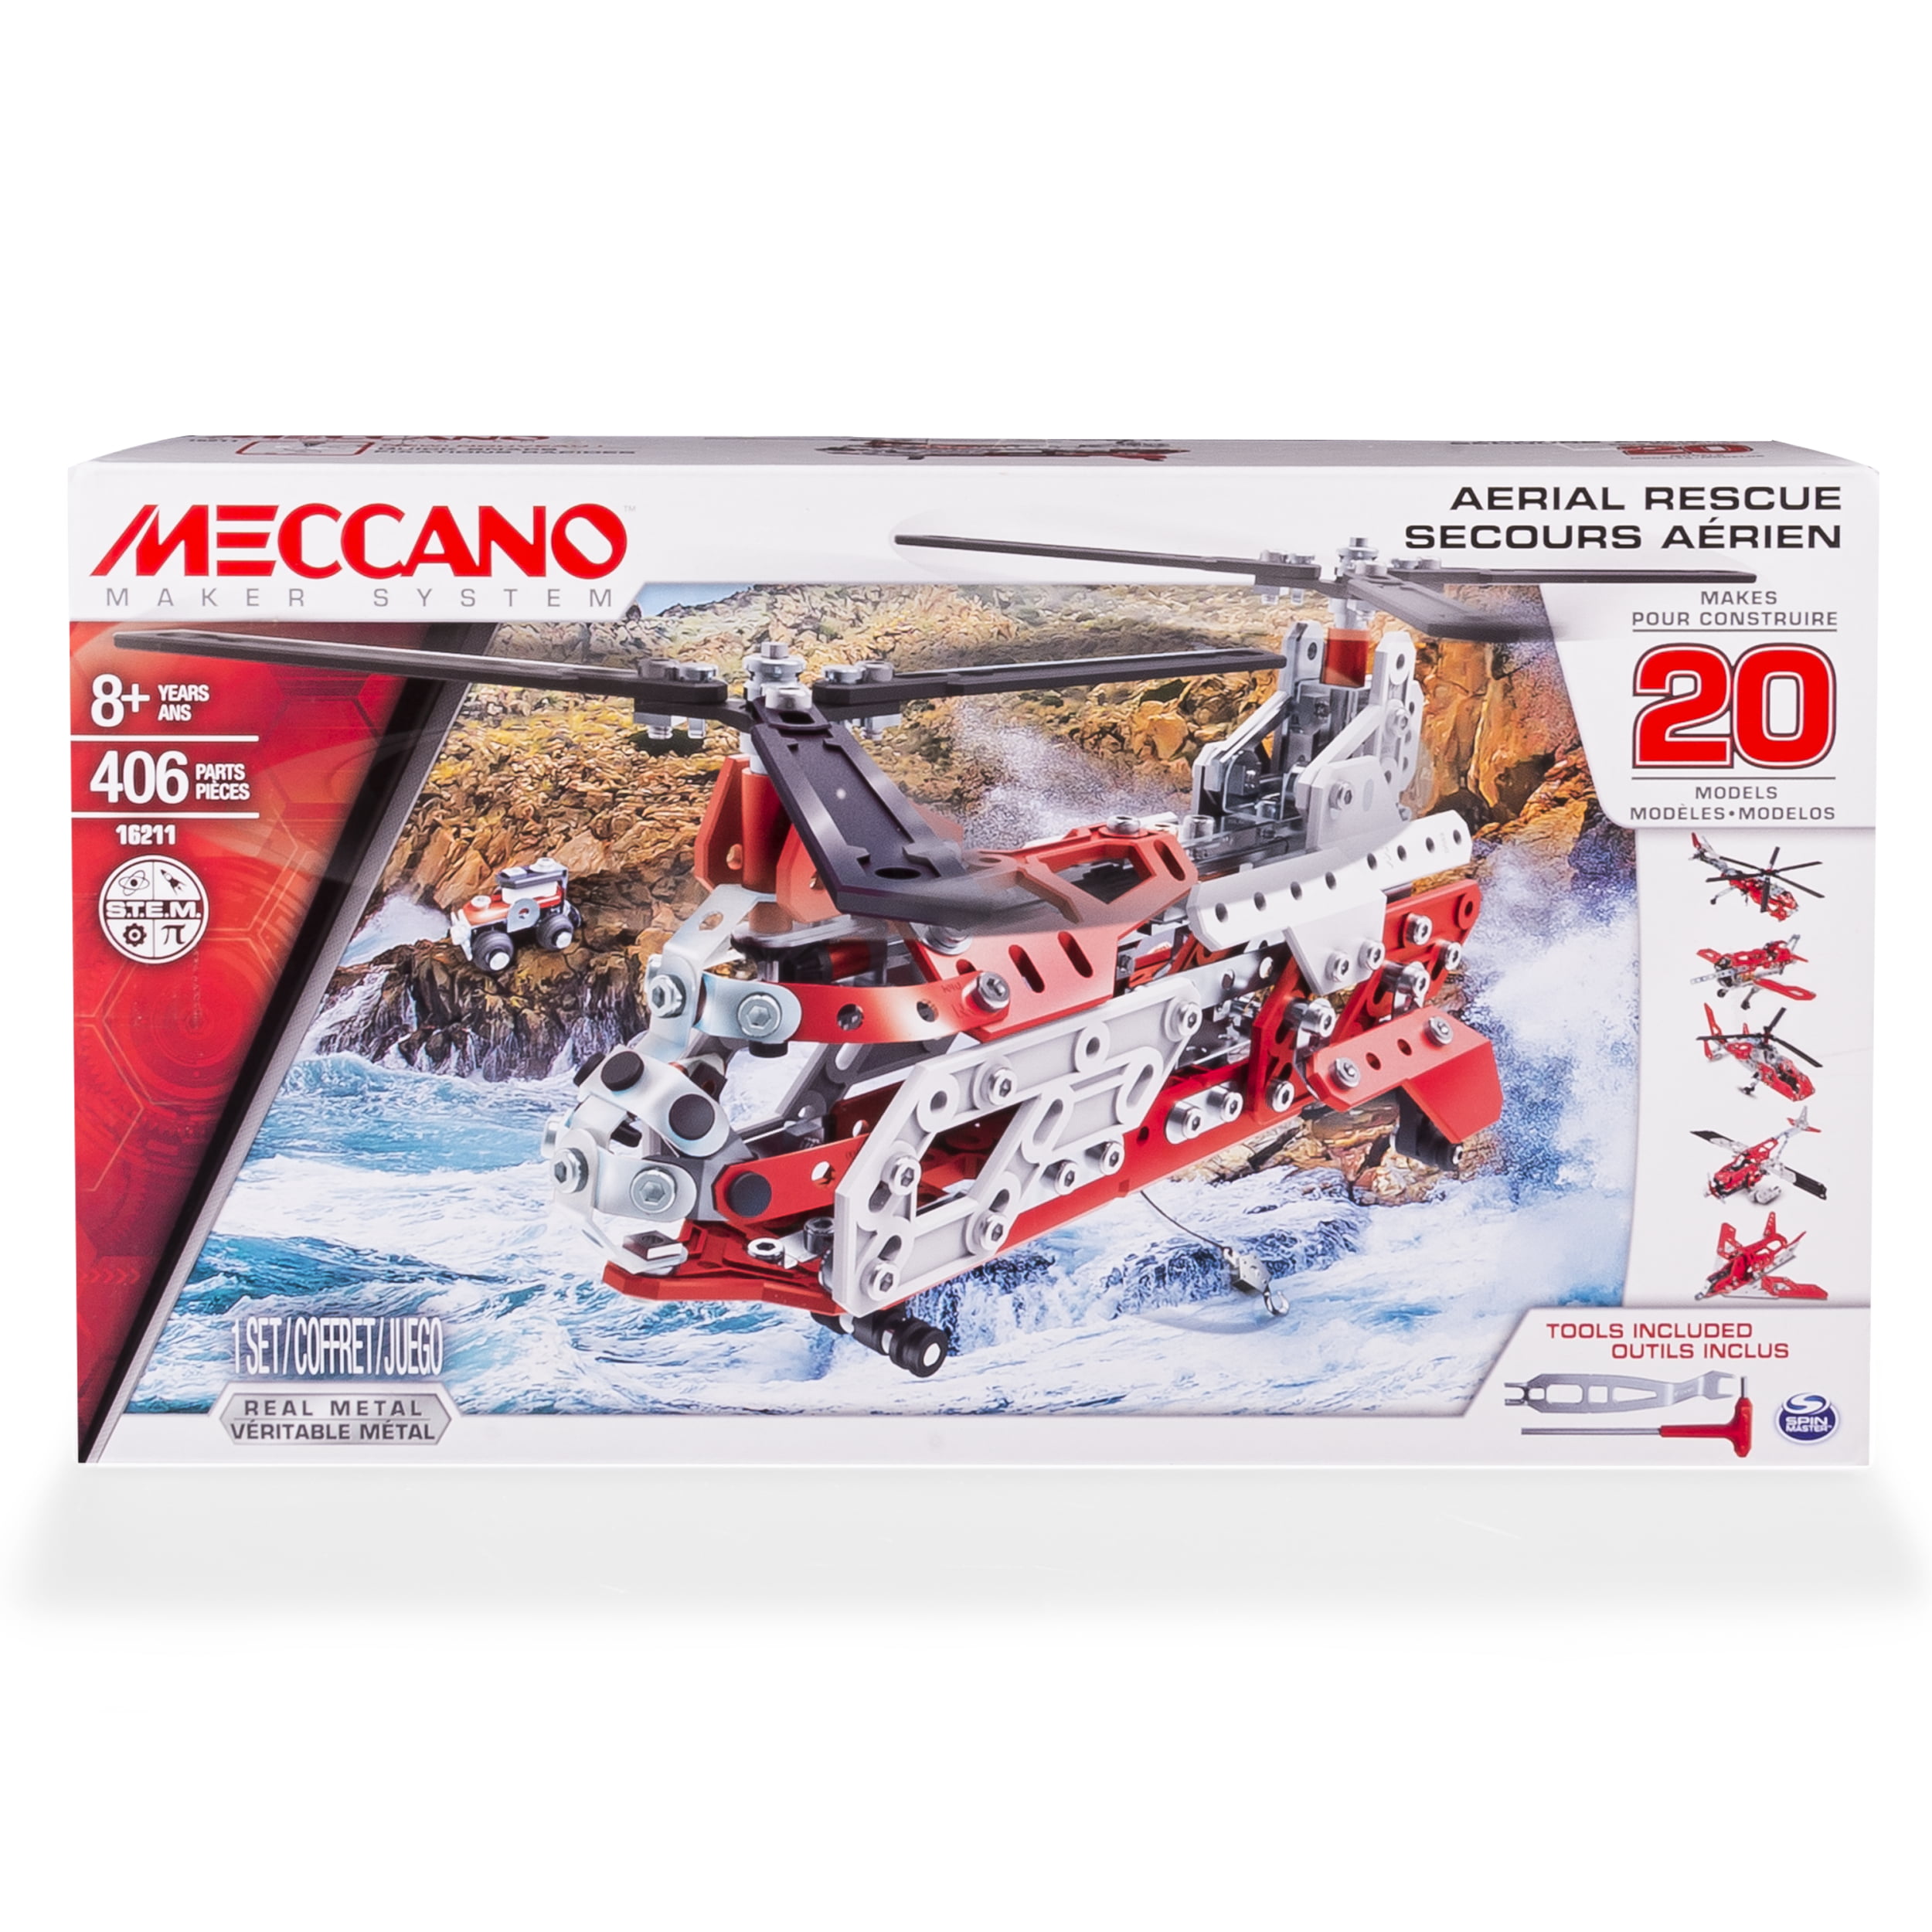 6 Race Car Bundle Bulldozer Car SMaster Meccano Erector Building Set of Bi-Plane - Miniature Plane Helicopter